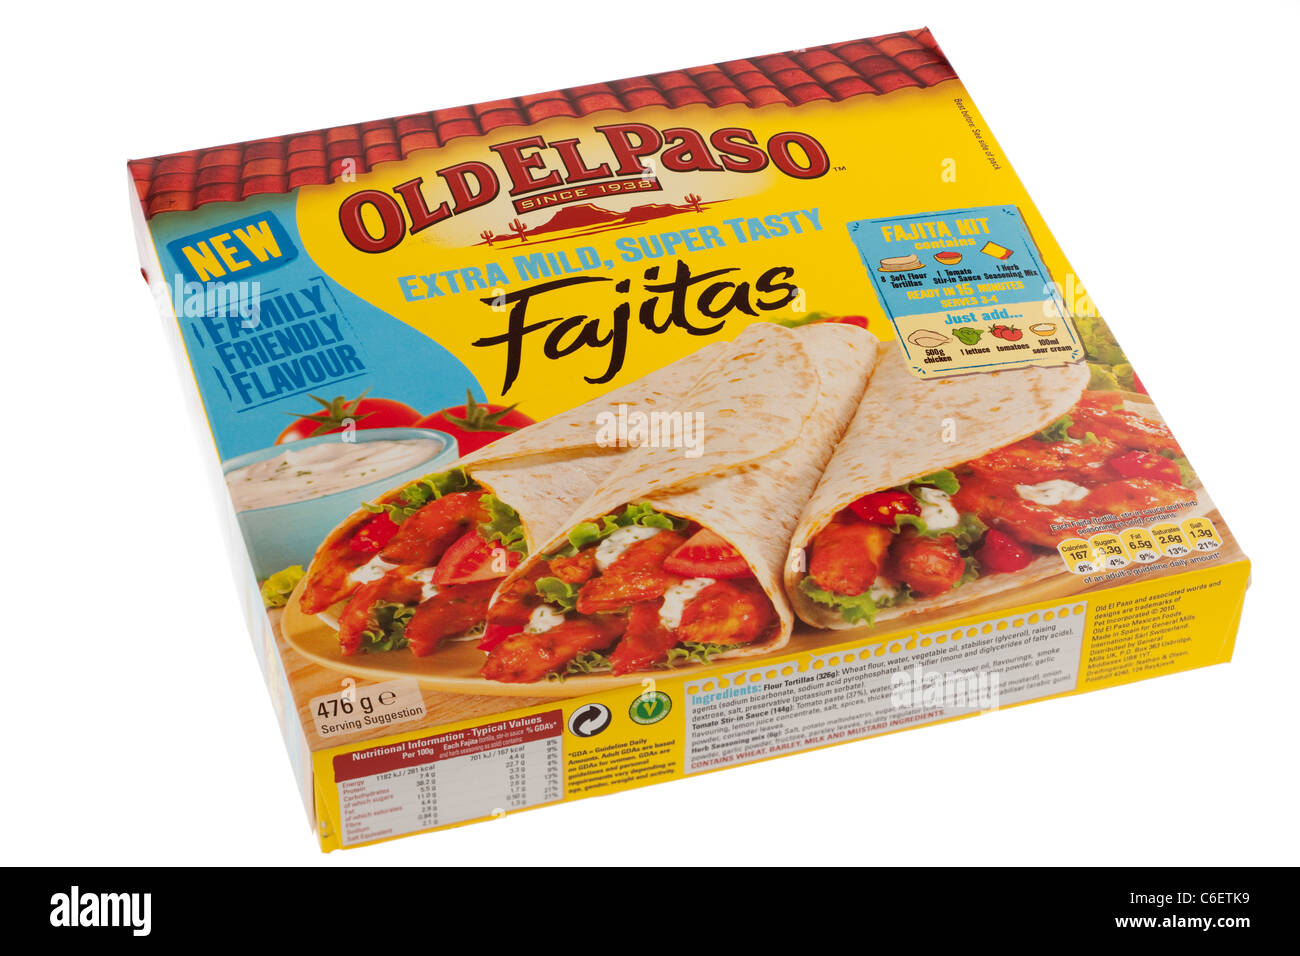 Box of Old El Paso extra mild Fajitas serving 3 or 4. Stock Photo